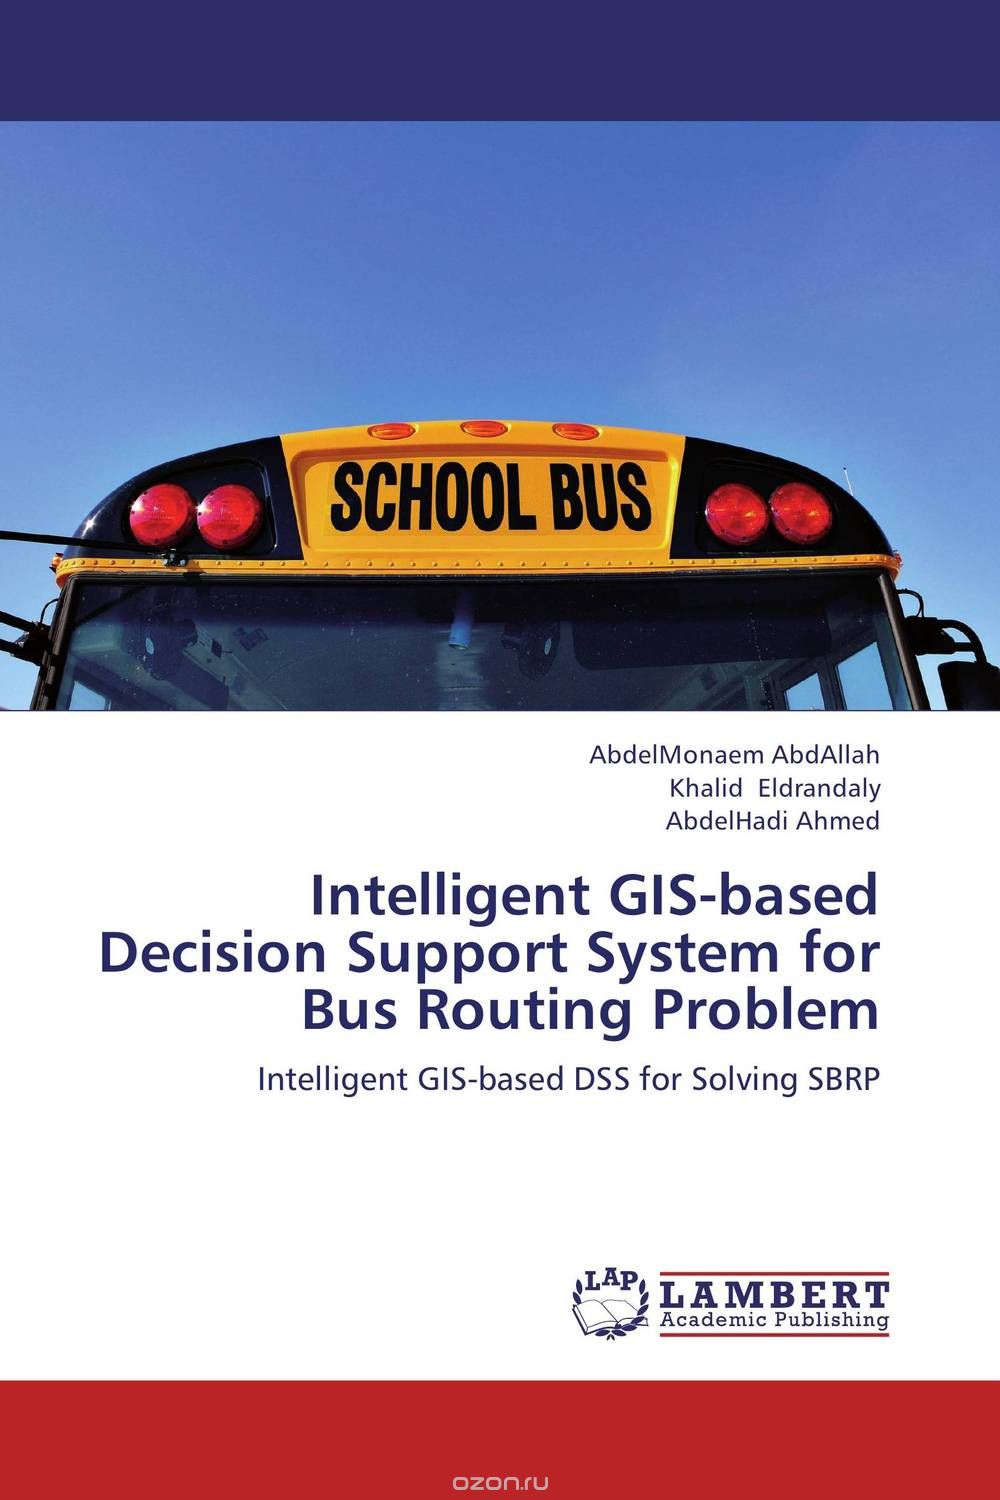 Скачать книгу "Intelligent GIS-based Decision Support System for Bus Routing Problem"